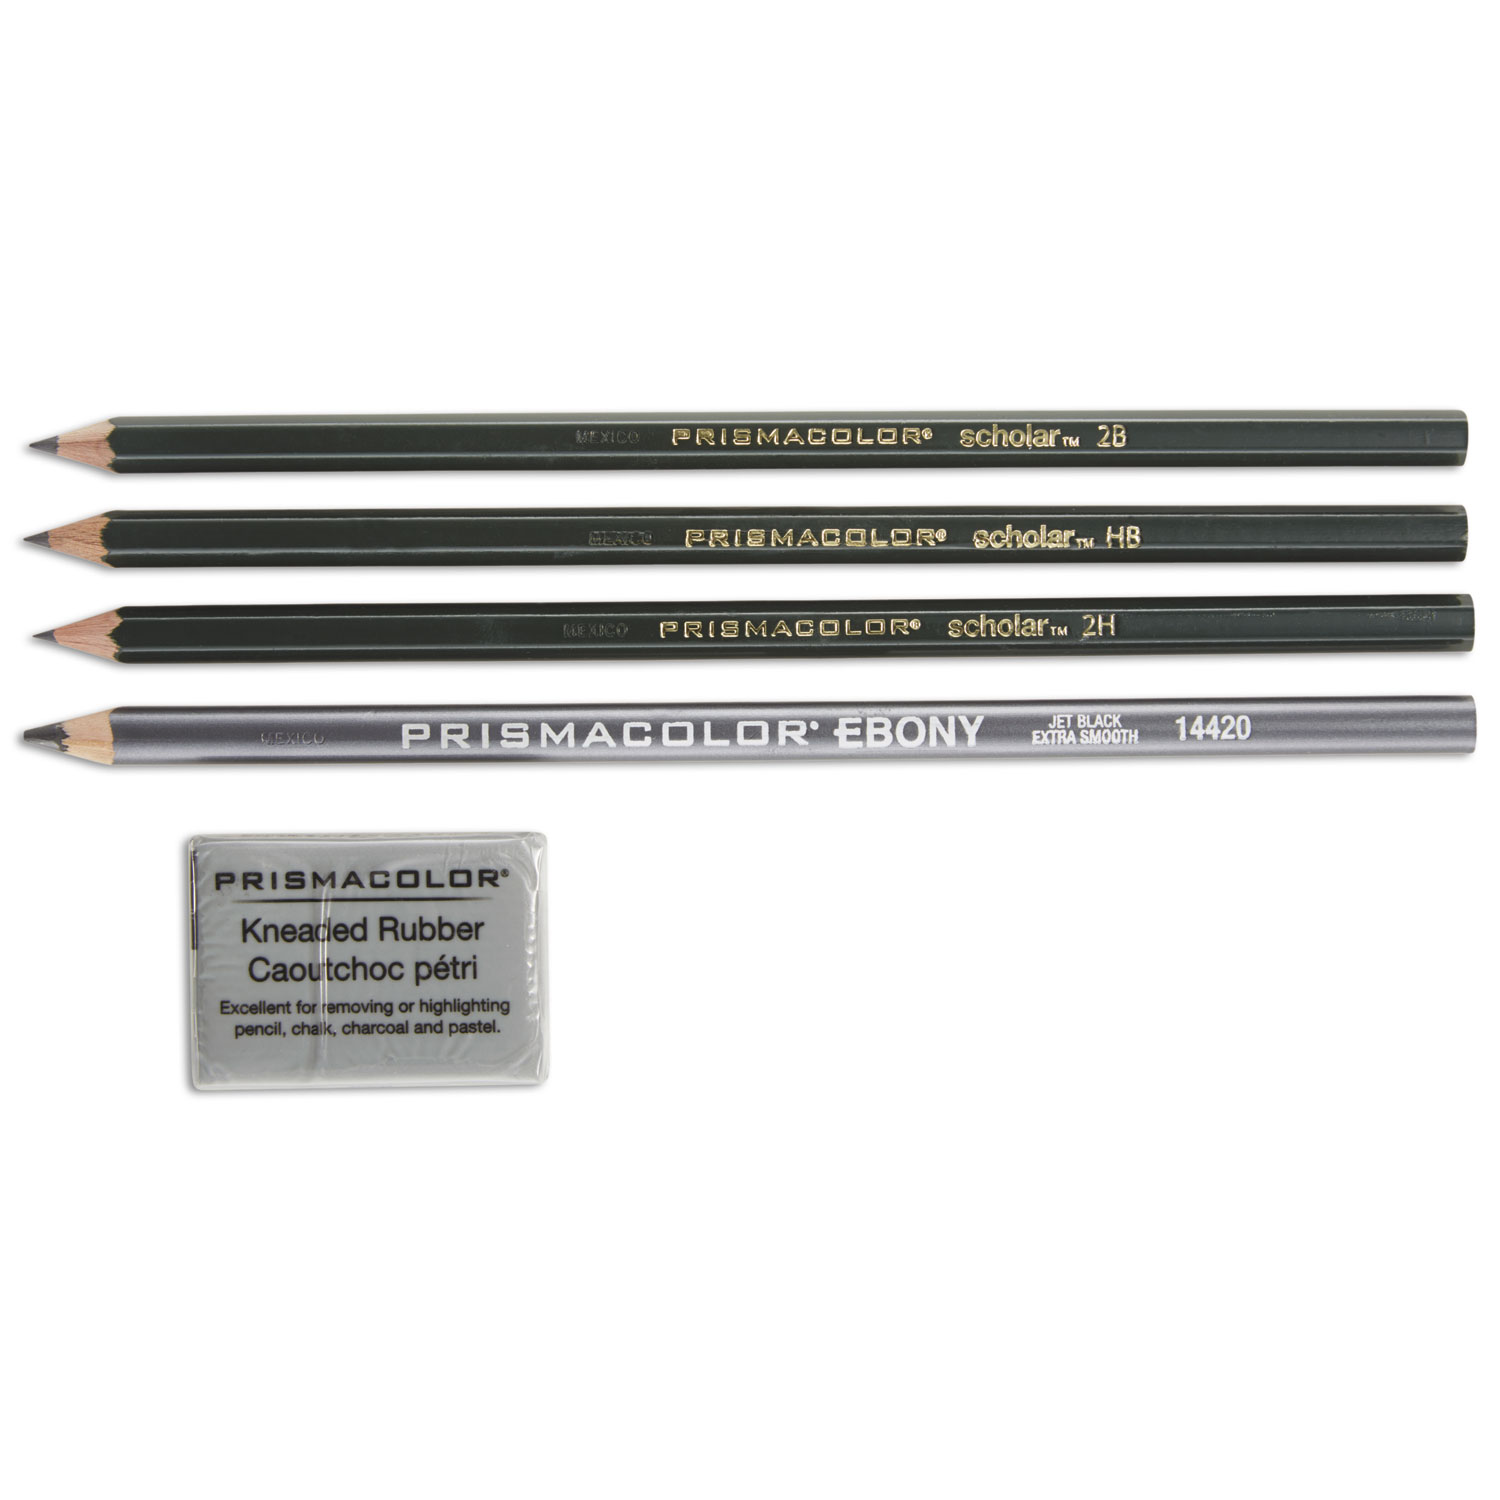  Prismacolor 2502 Scholar Graphite Pencil Set, 2 mm, Assorted Lead Hardness Ratings, Black Lead, Dark Green Barrel, 4/Set (SAN2502) 